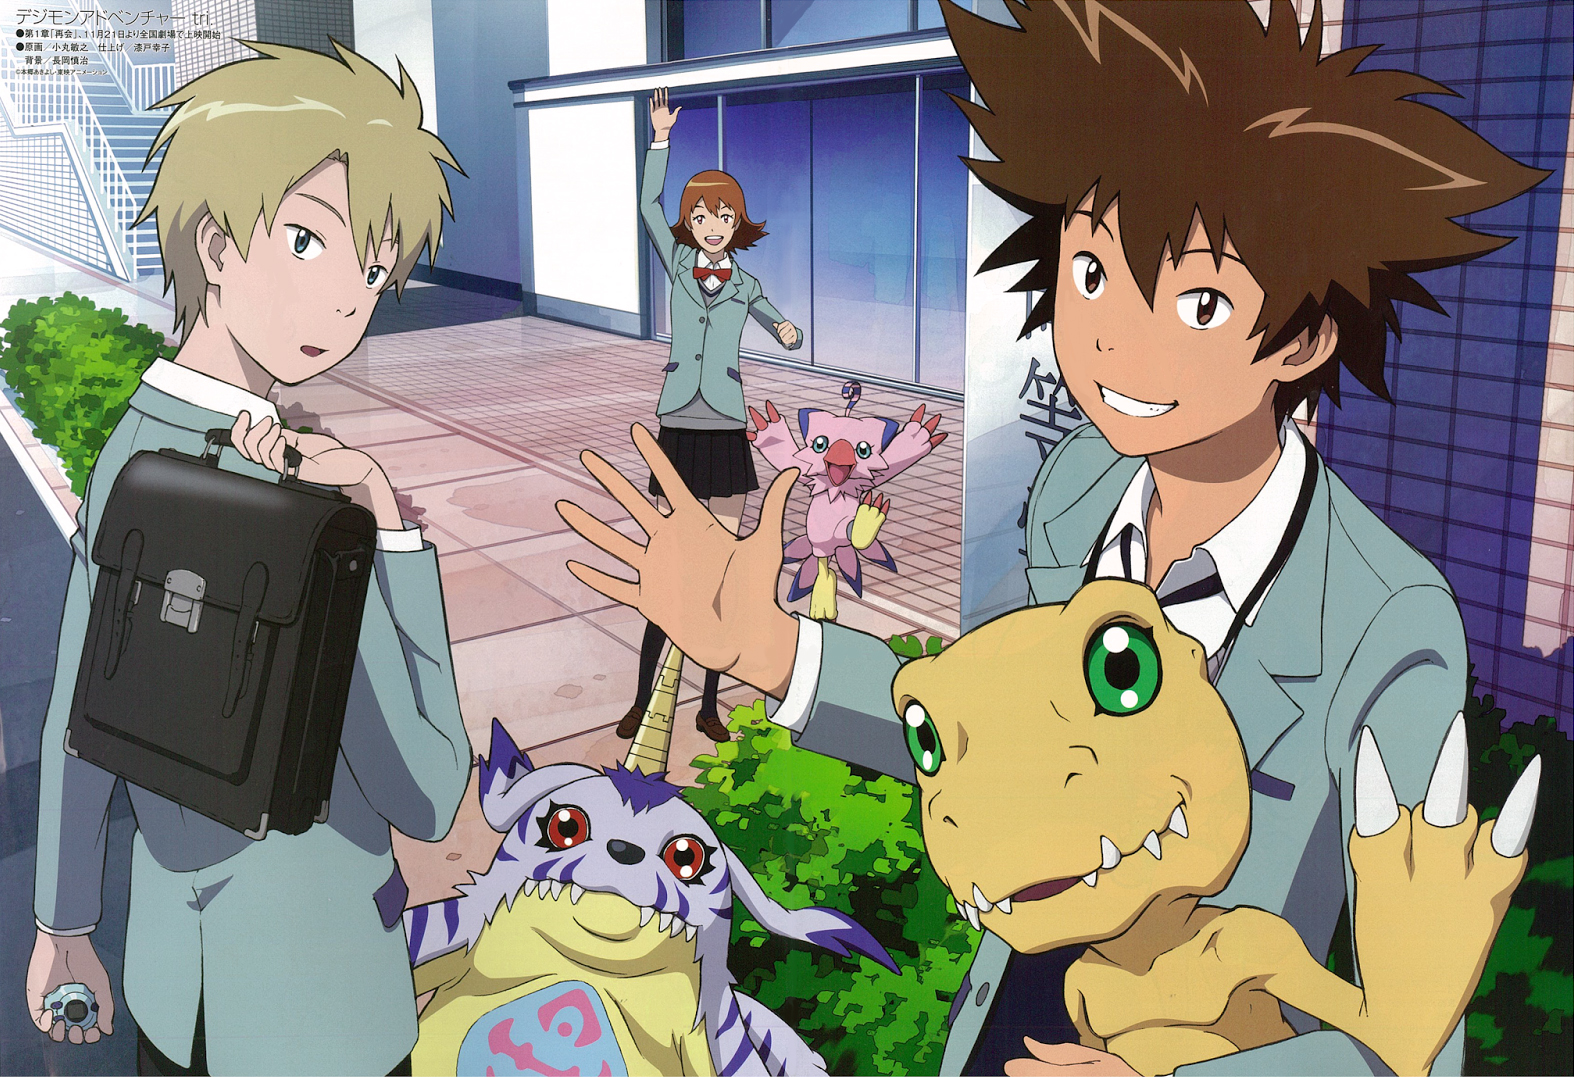 Digimon Adventure Tri: Reunion, Anime Review